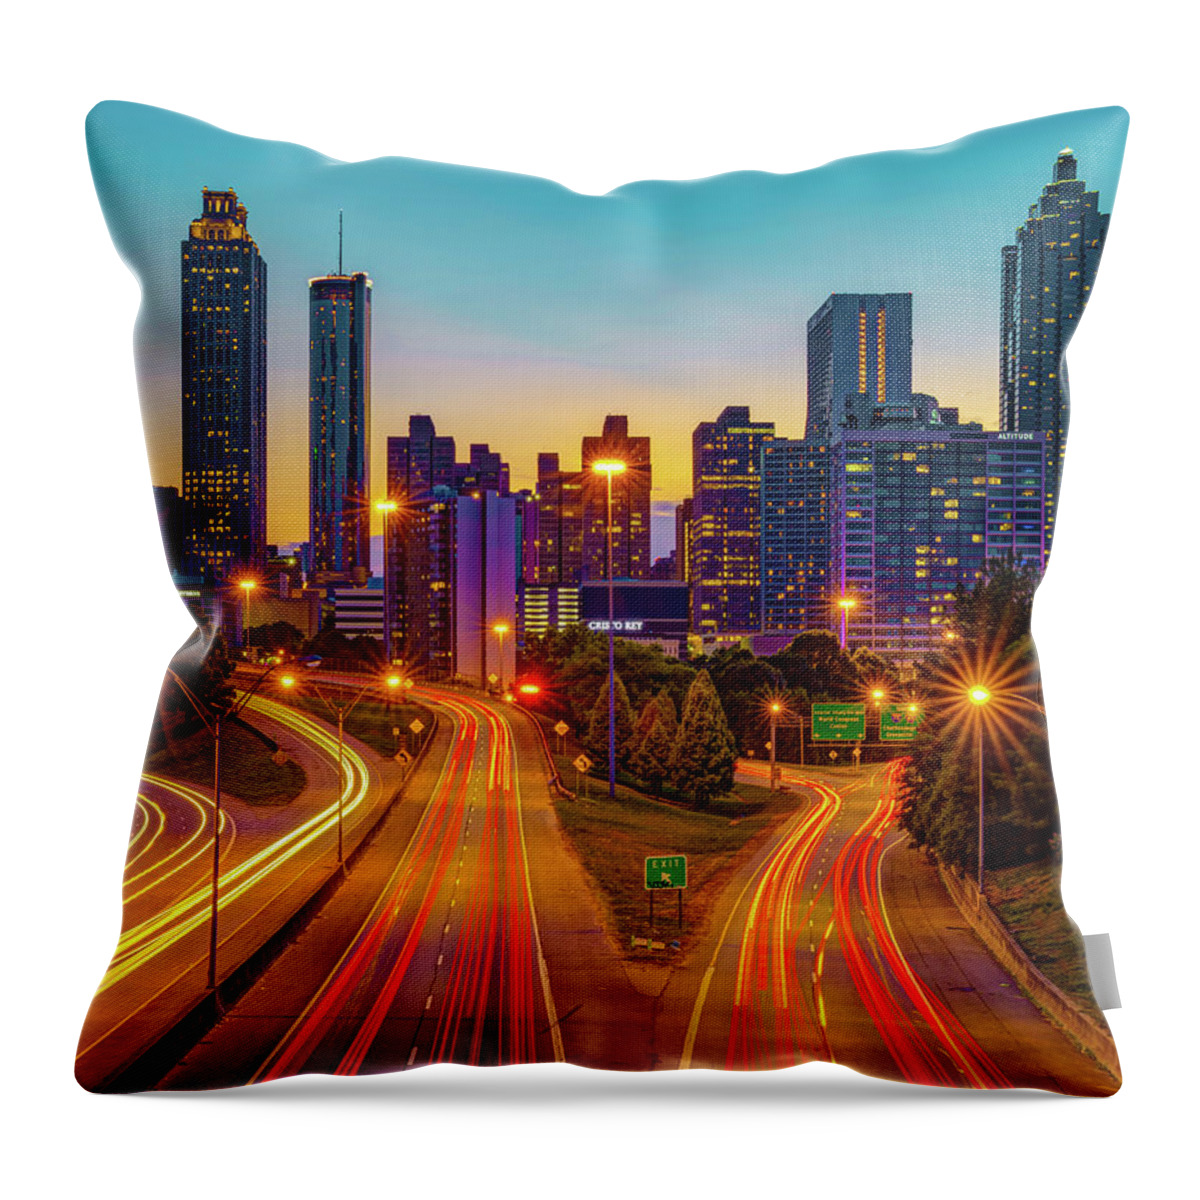 Atlanta Skyline Throw Pillow featuring the photograph Atlanta Skyline Colors of Dusk - Jackson Street Bridge View by Gregory Ballos